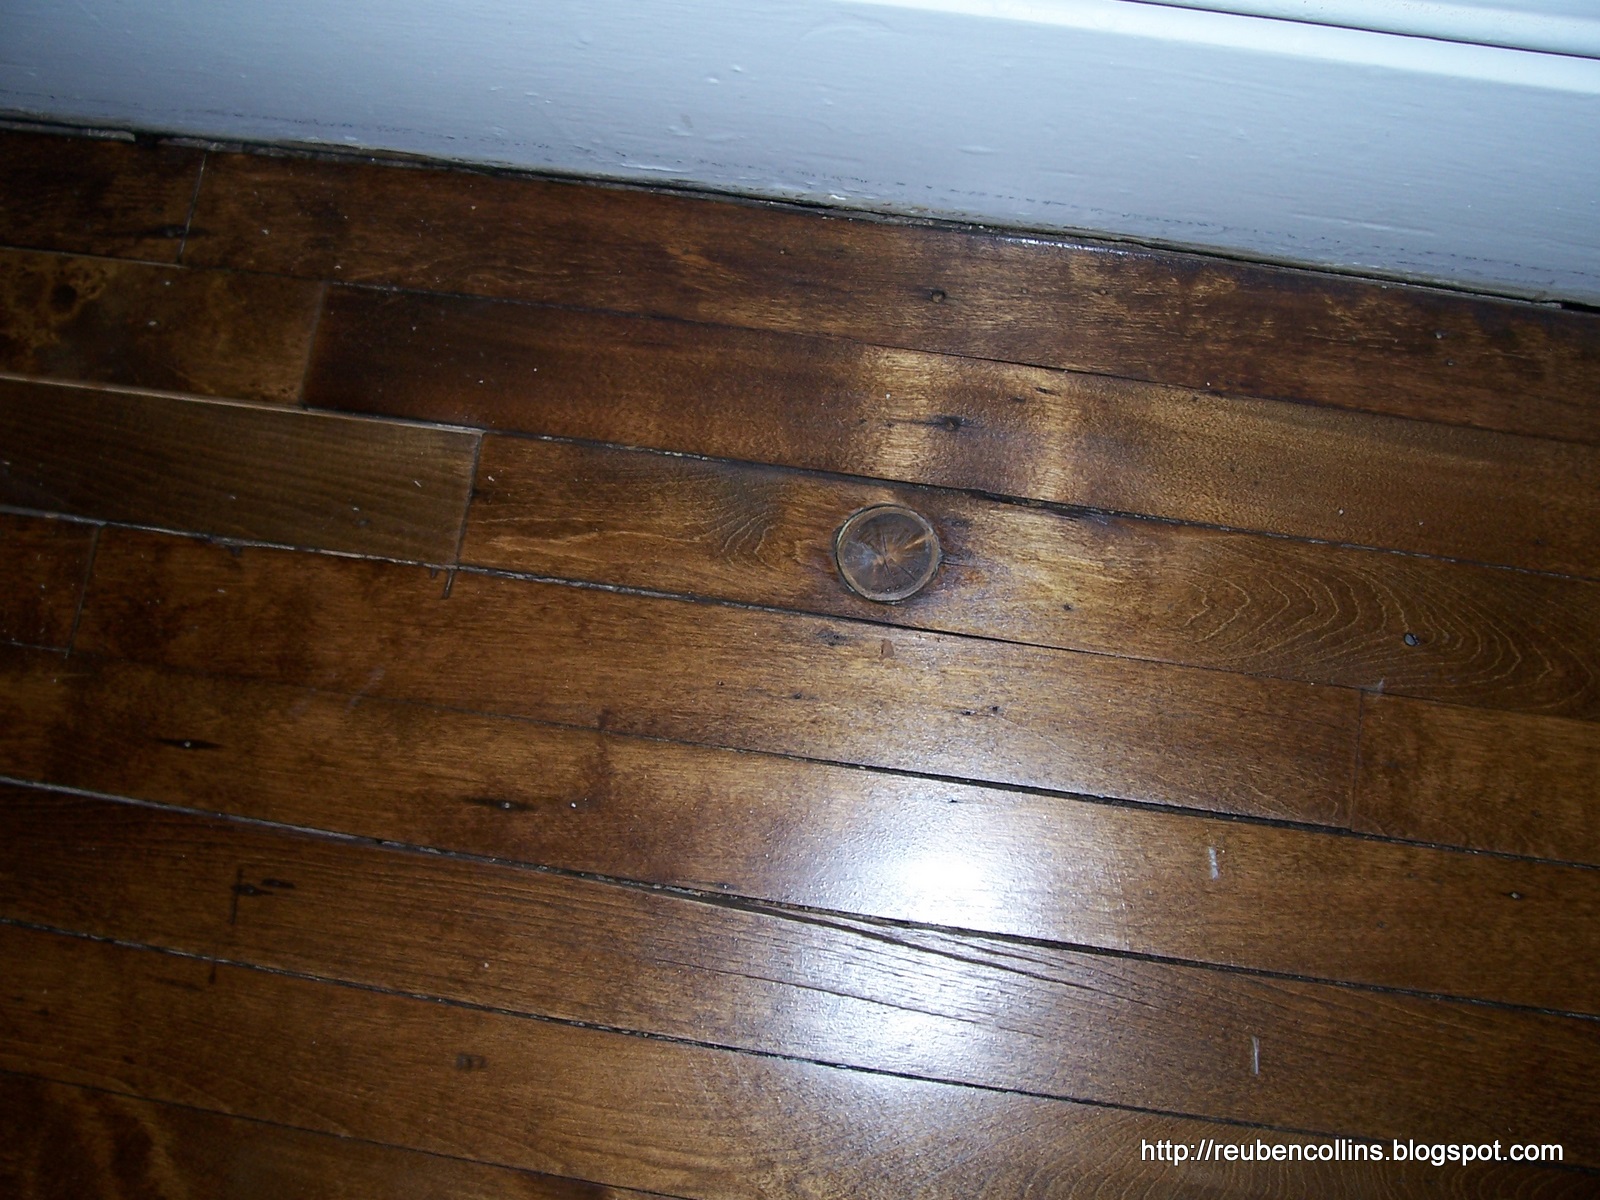 Radiator Holes In The Floor, Hardwood Floor With Plugs